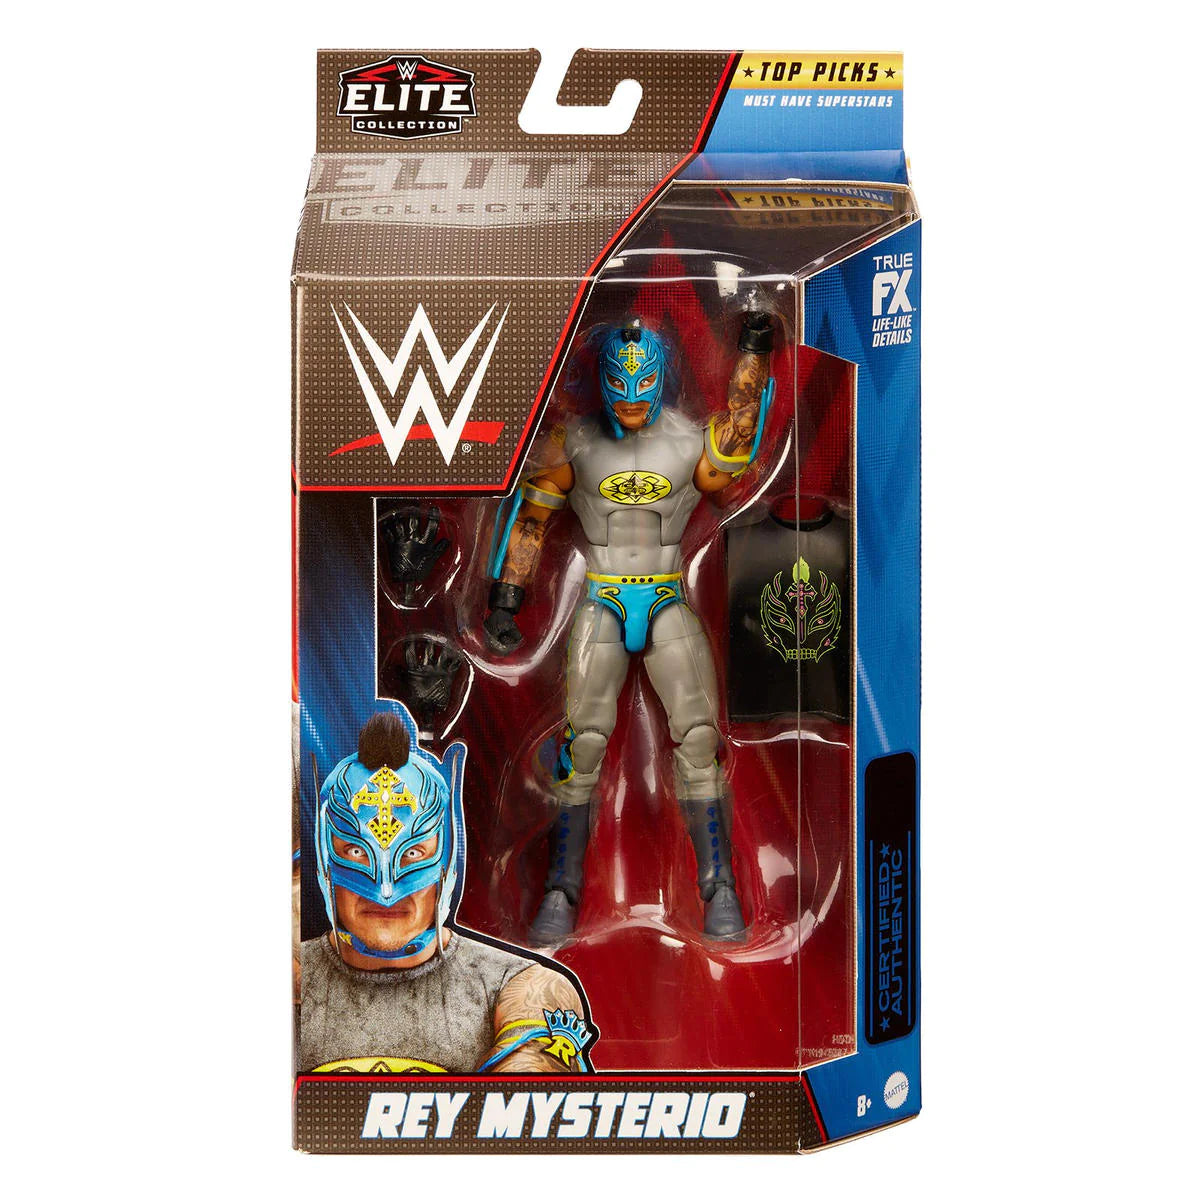 Rey Mysterio - WWE Elite Top Picks Action Figure